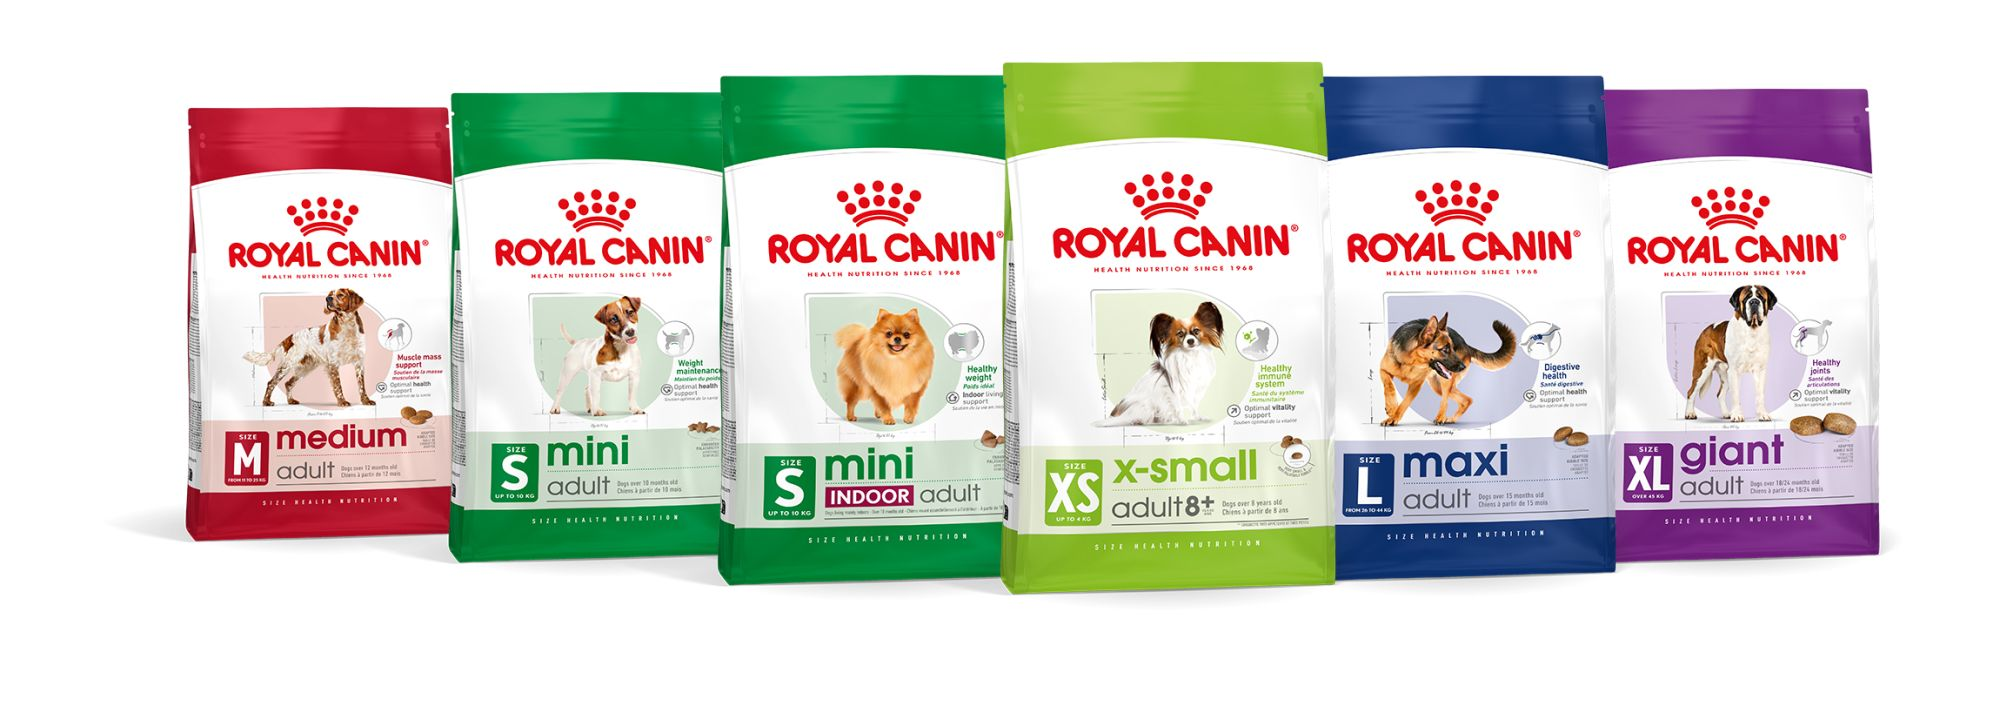 Royal Canin Size Health Nutrition Range